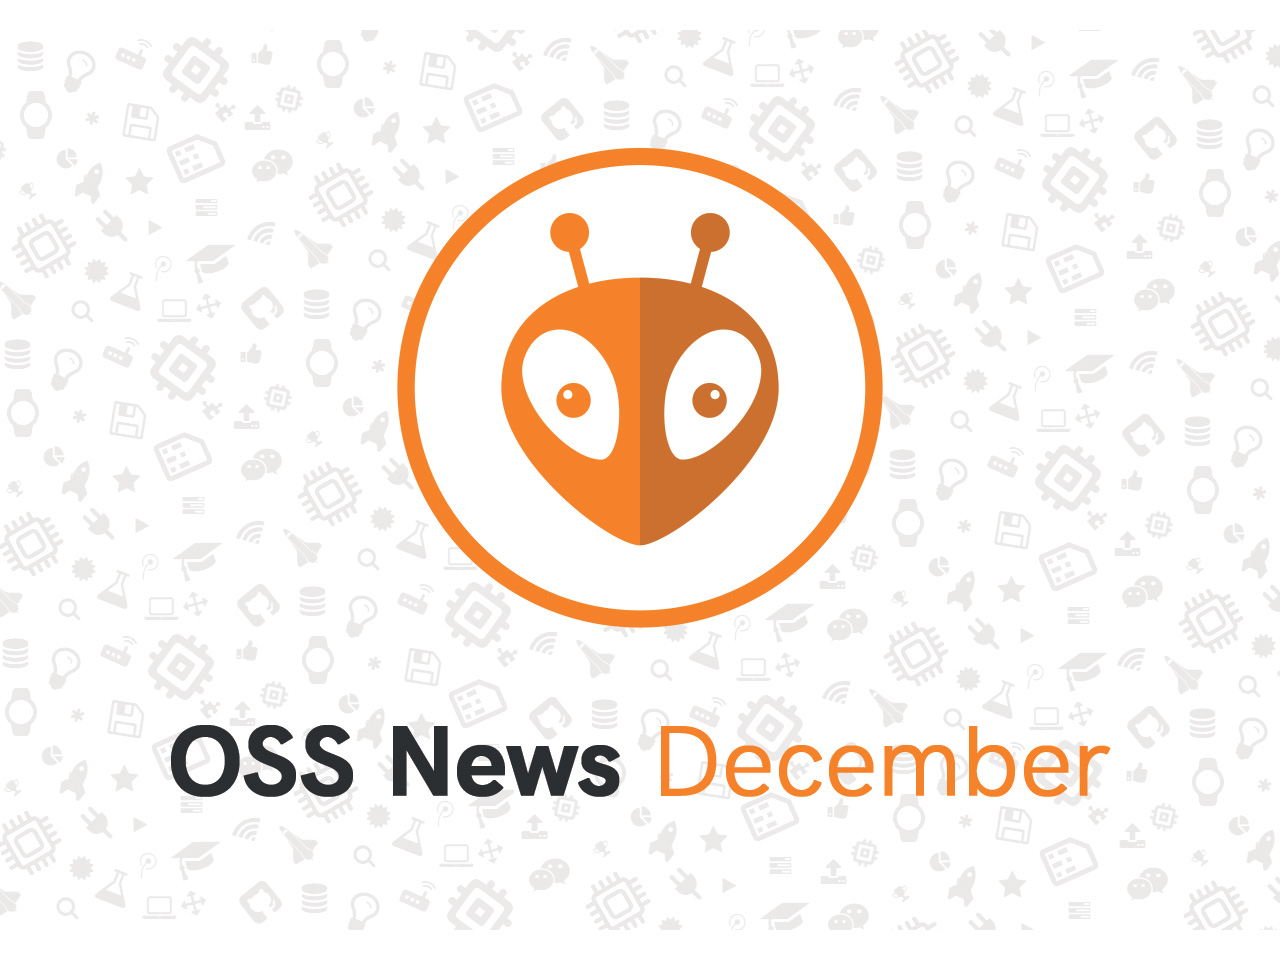 PlatformIO Open Source December Updates